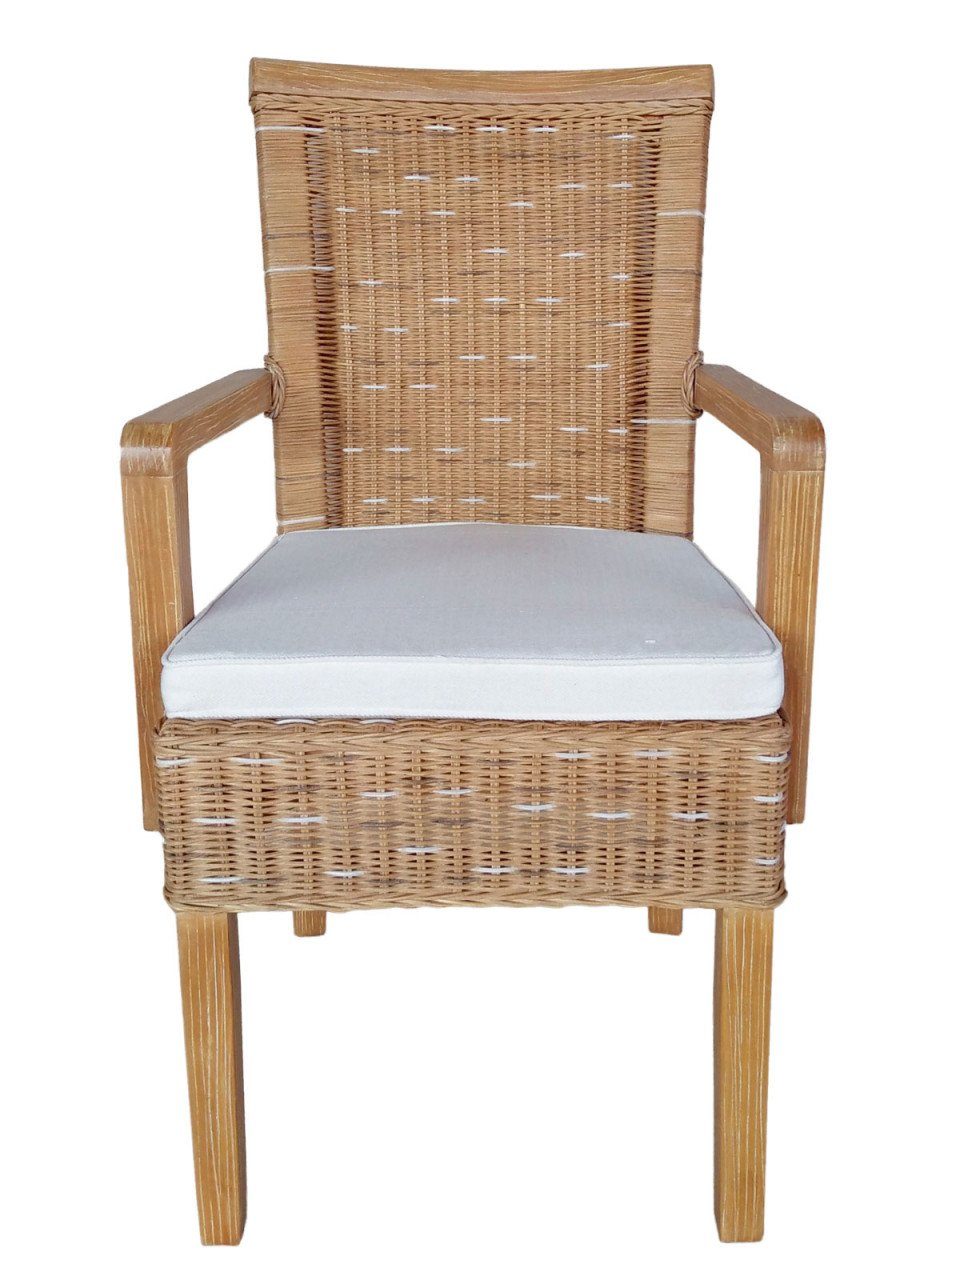 soma Sessel Soma Esszimmer-Stühle-Set mit Armlehnen 2 Stück Rattanstuhl weiß od. b, Stuhl Sessel Sitzplatz Sitzmöbel